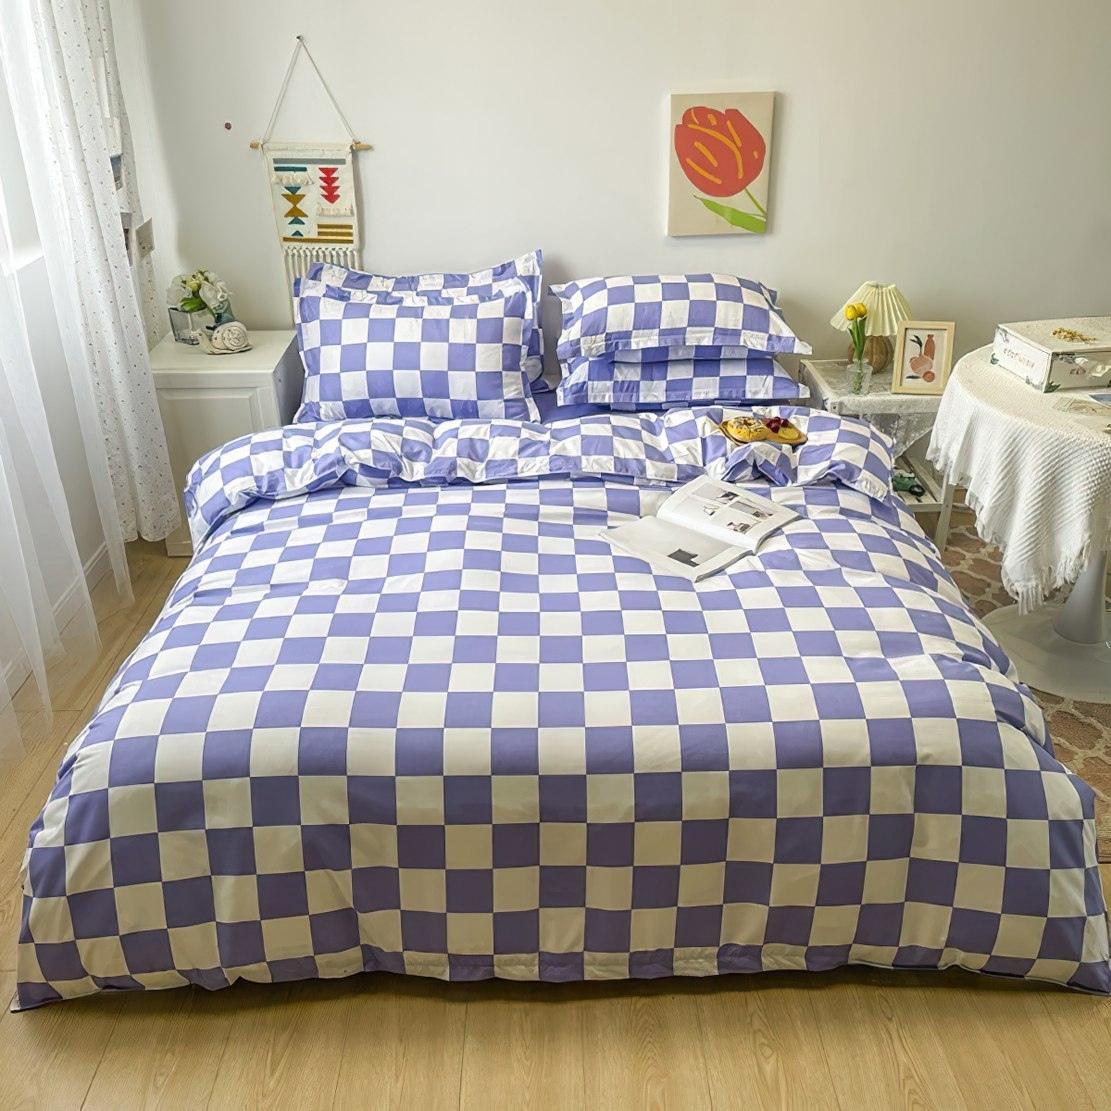 Purple white checkerboard bedding set